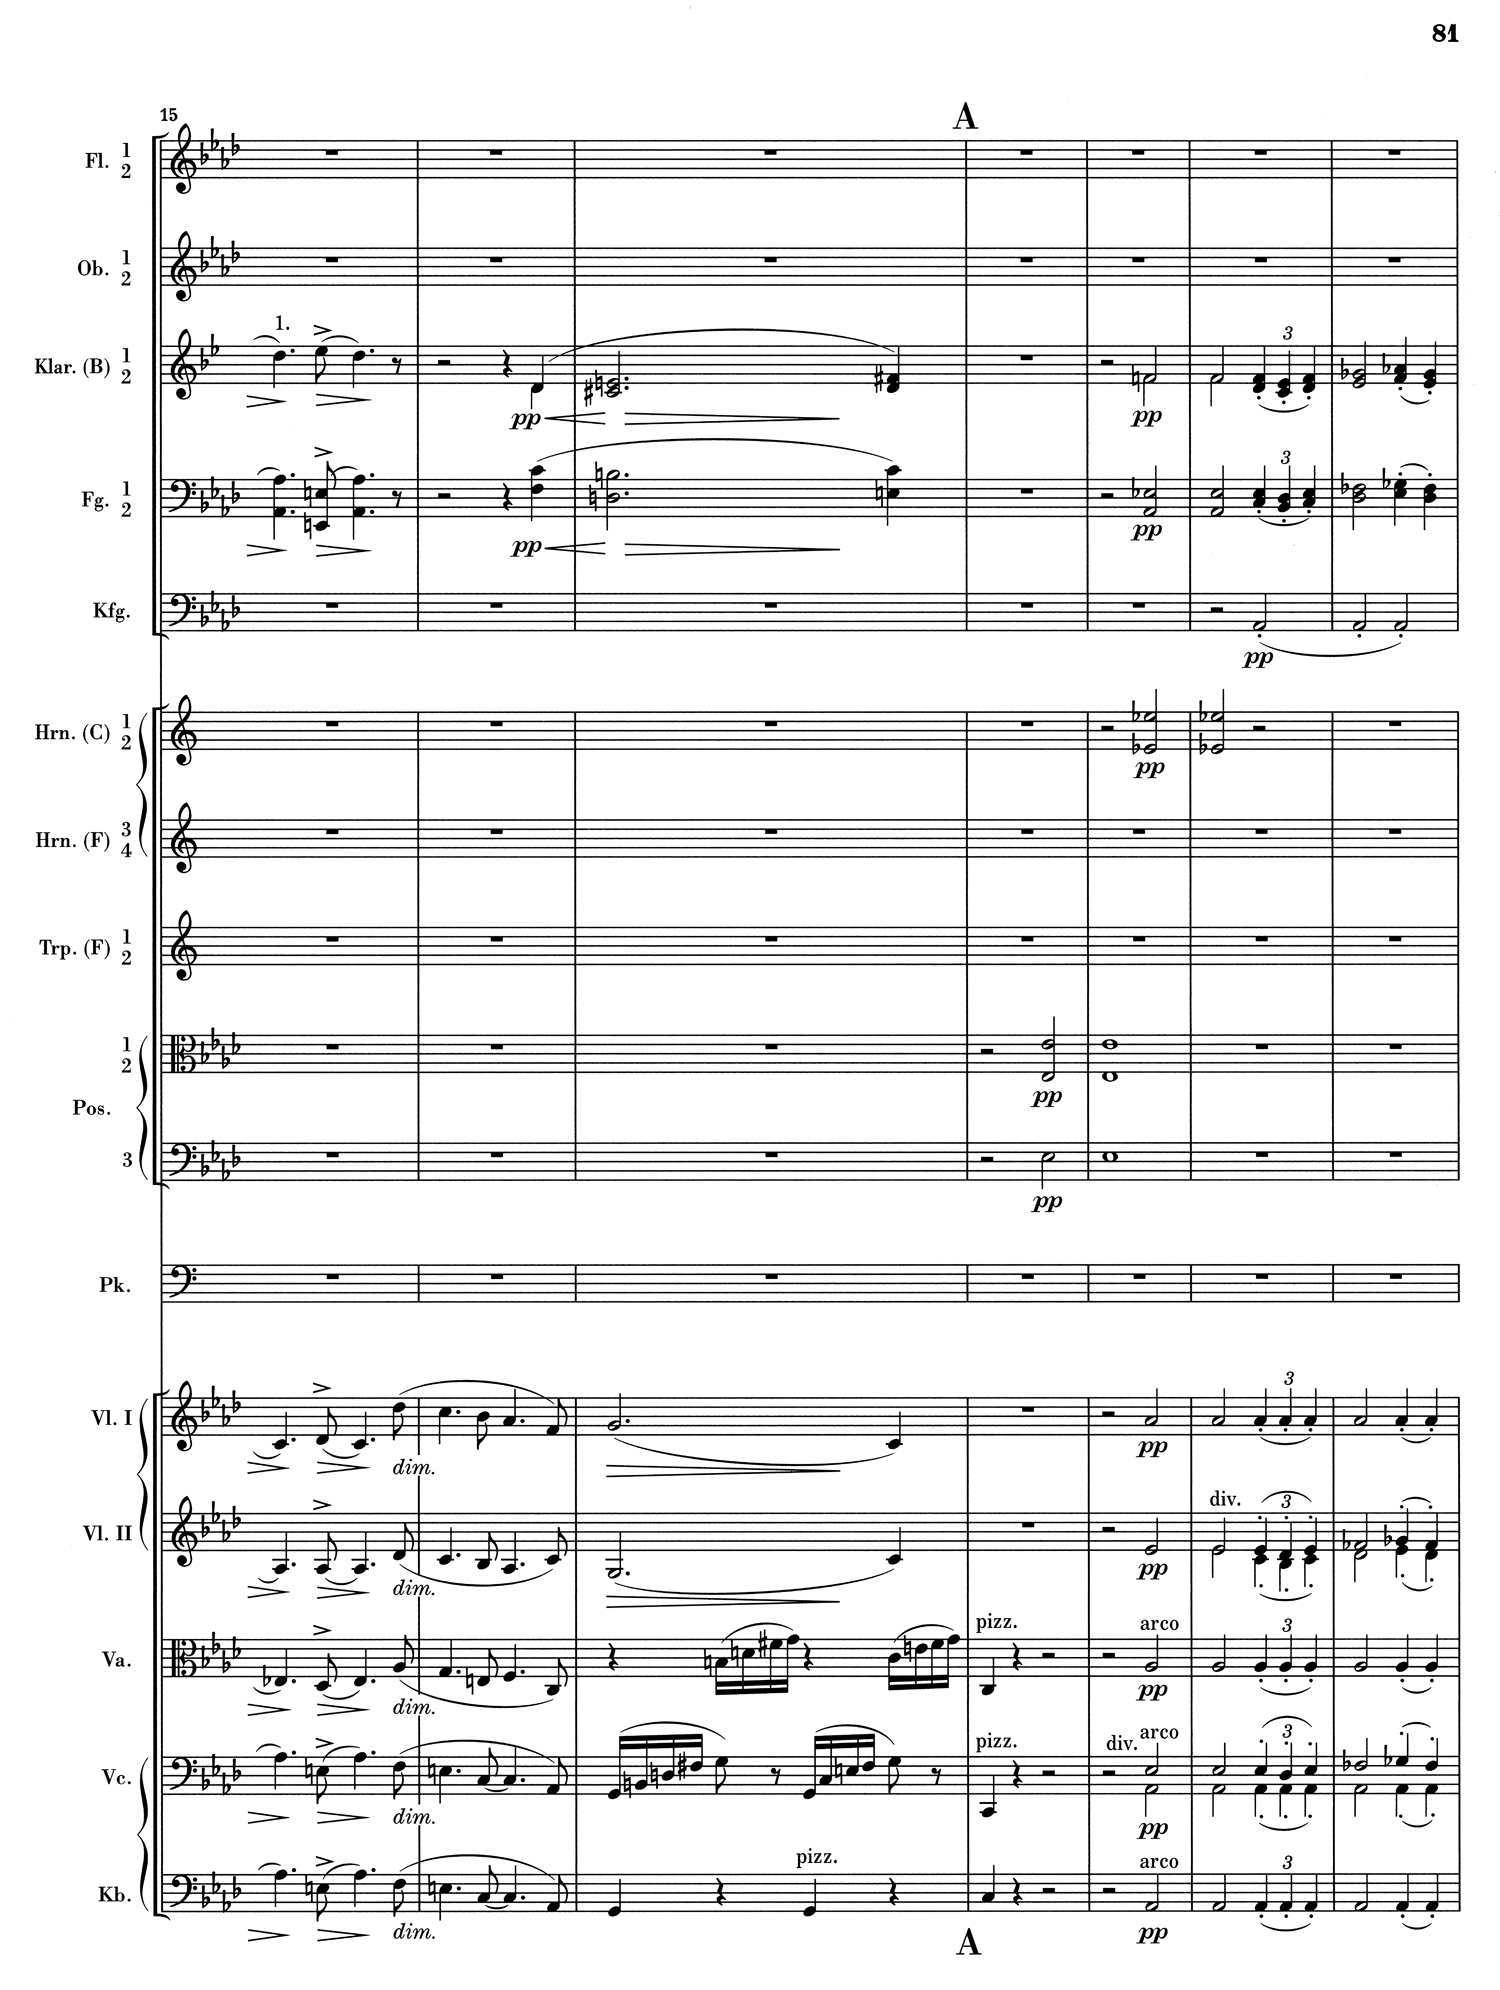 Brahms 3 Score 10.jpg